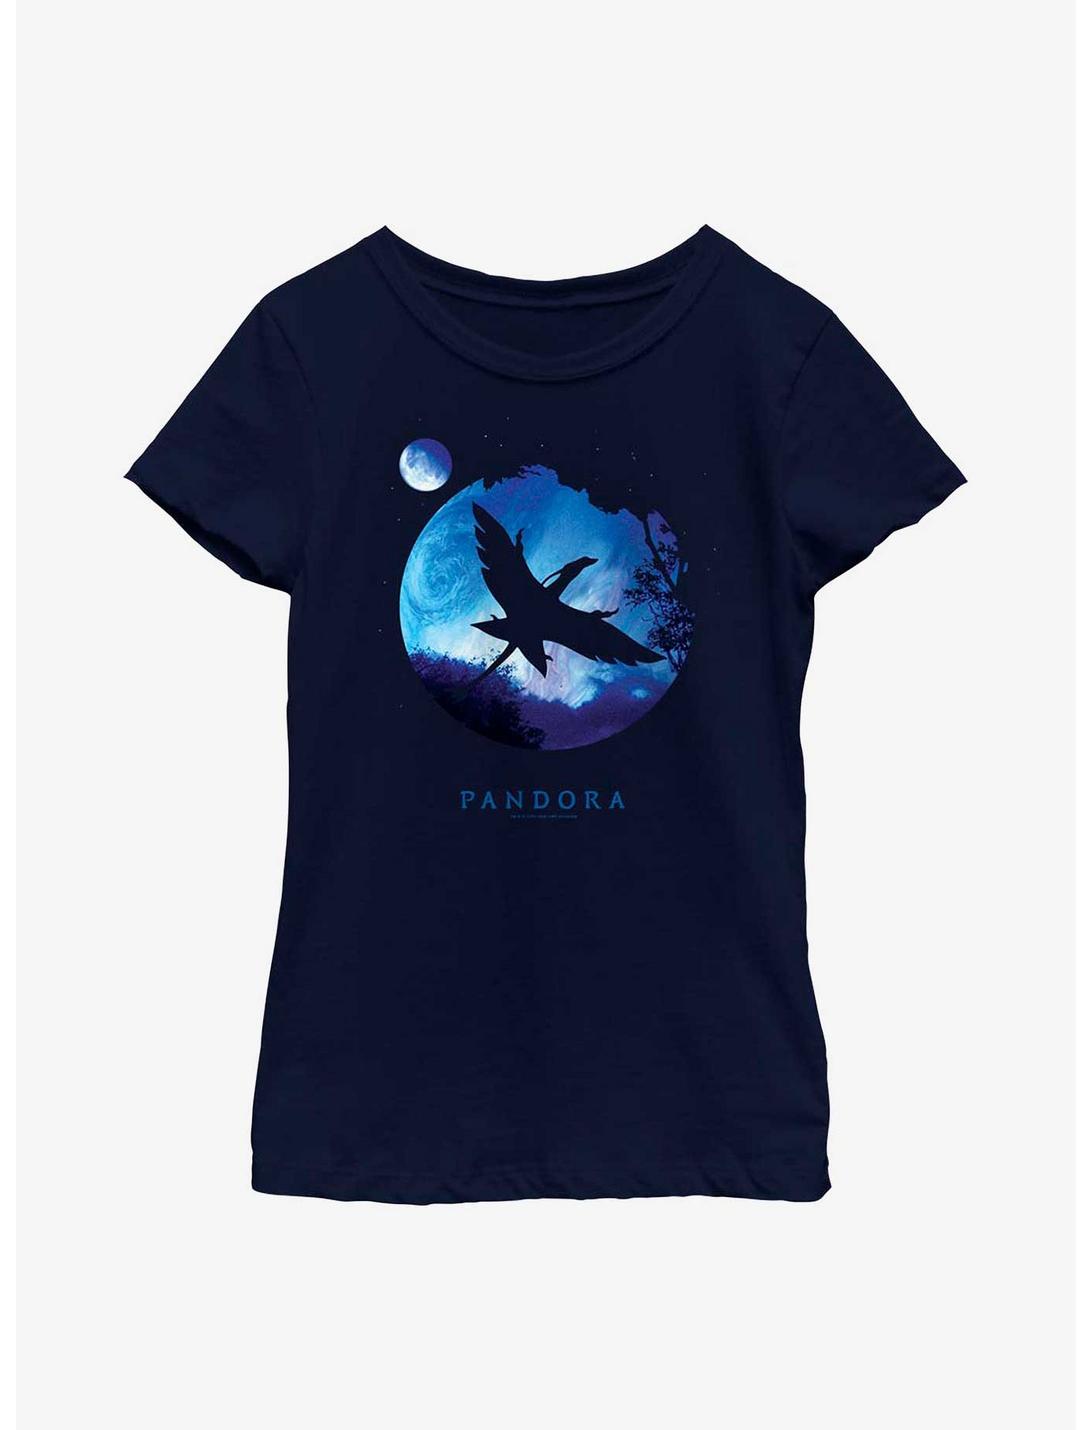 Avatar Pandora Planet Youth Girls T-Shirt, NAVY, hi-res